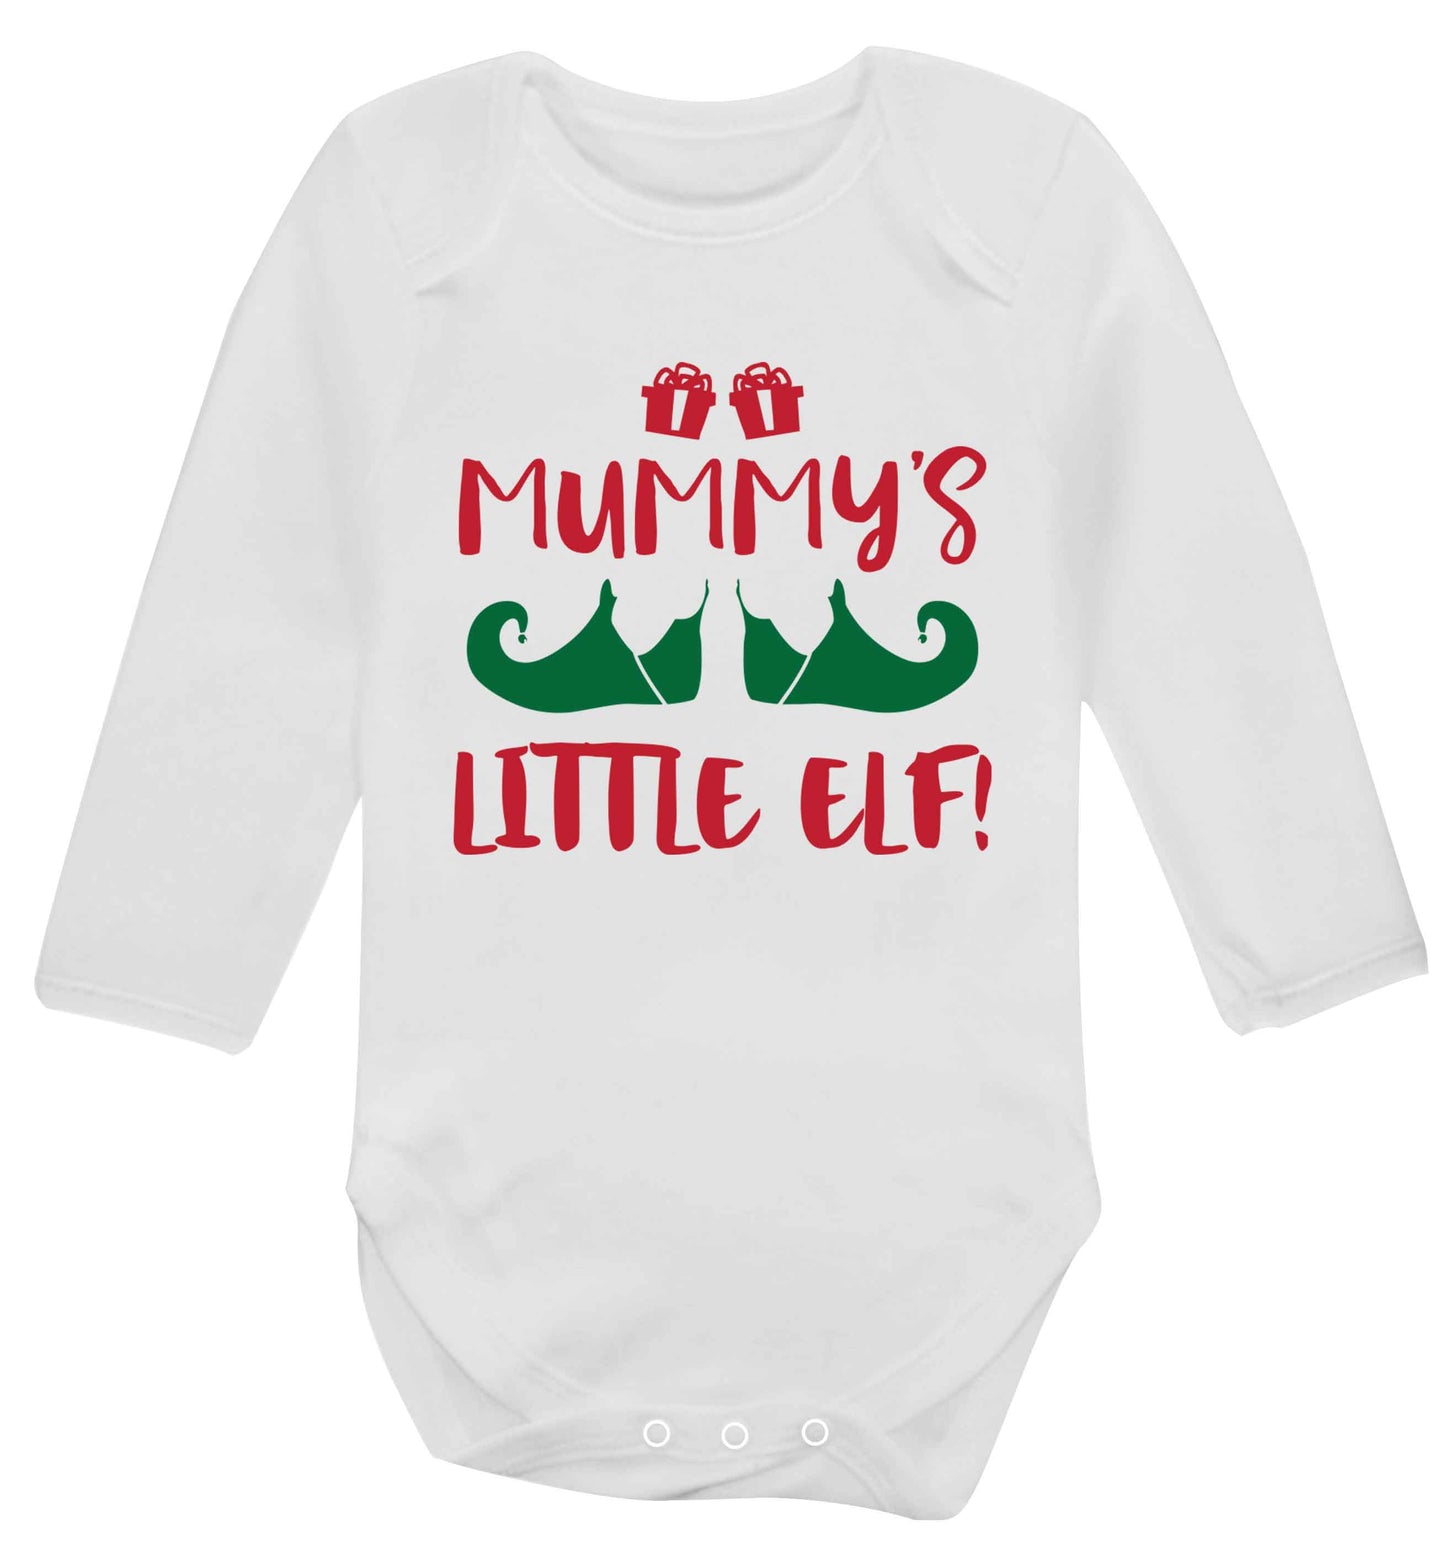 Mummy's little elf Baby Vest long sleeved white 6-12 months